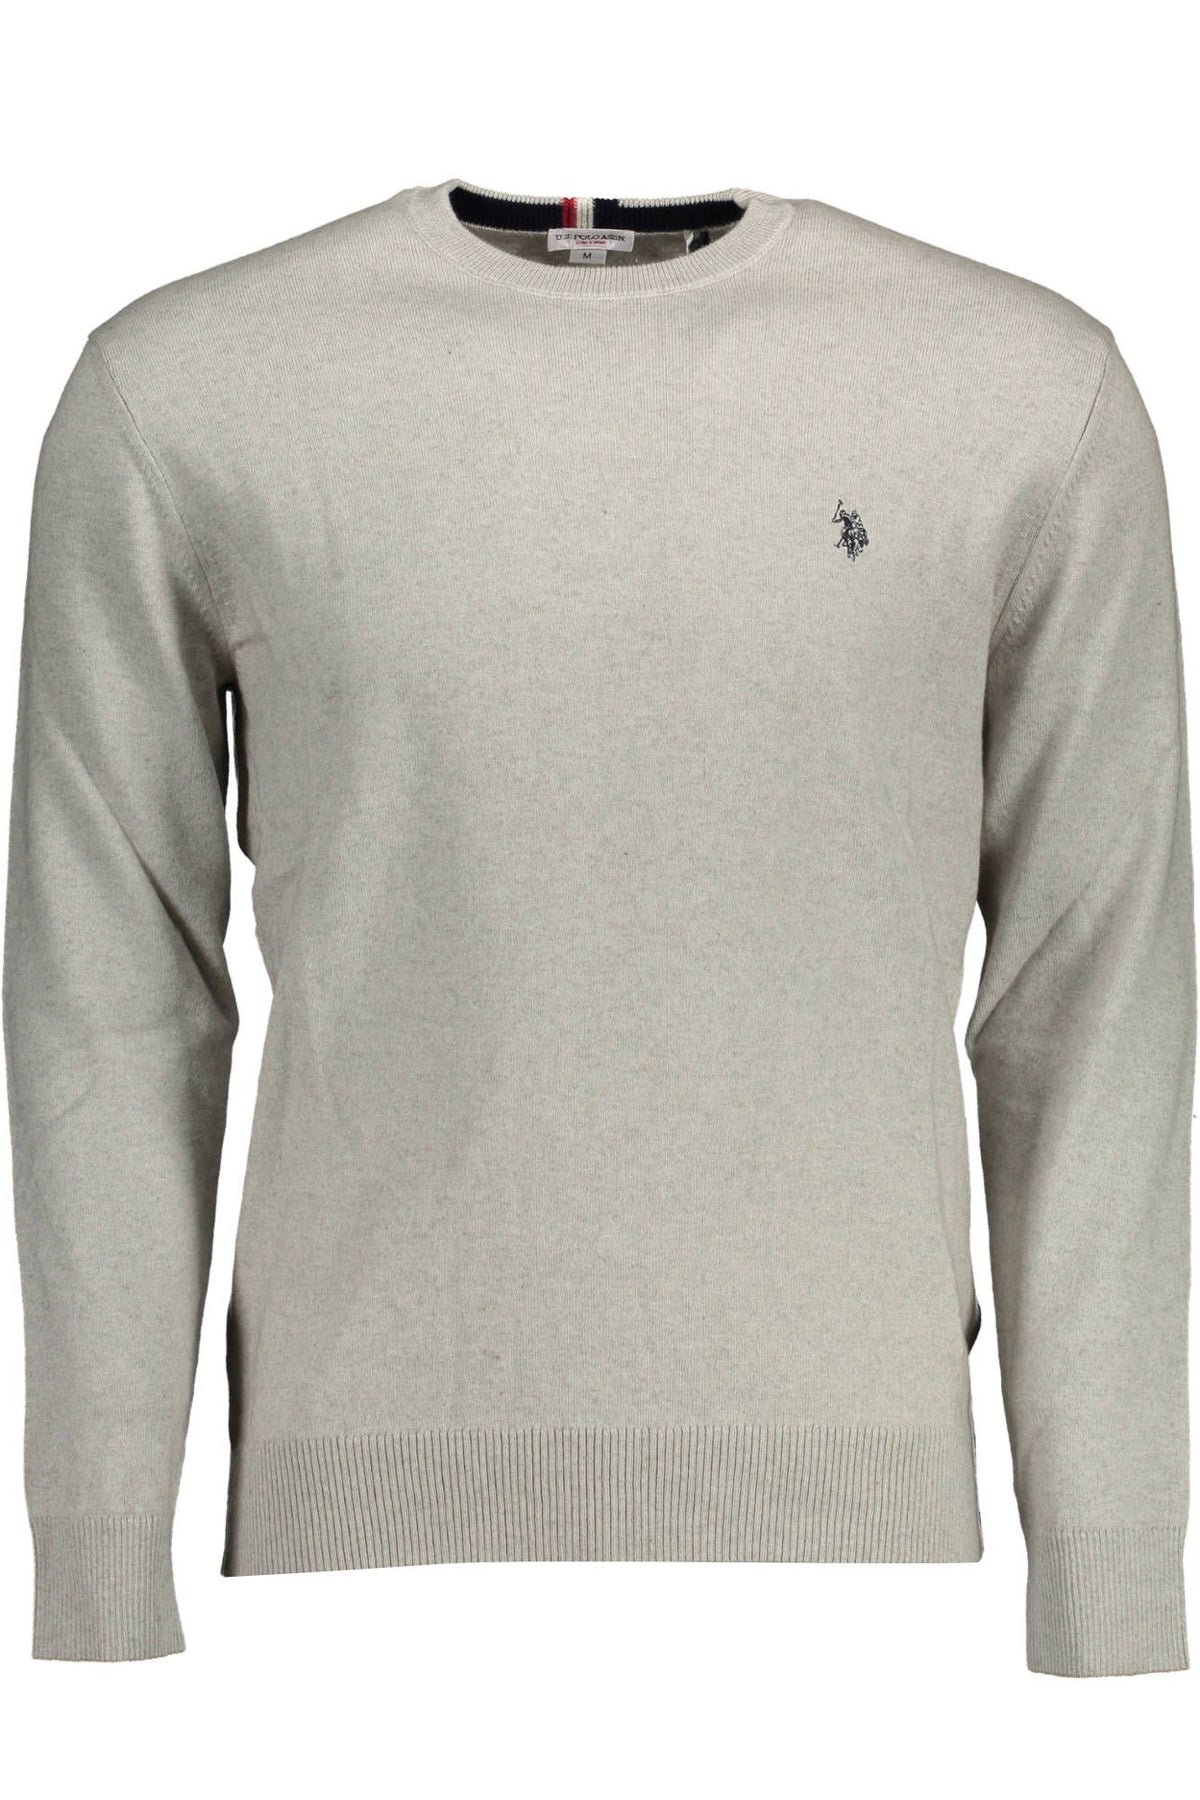 U.S. POLO ASSN. Elegant Gray Cotton-Cashmere Men's Sweater